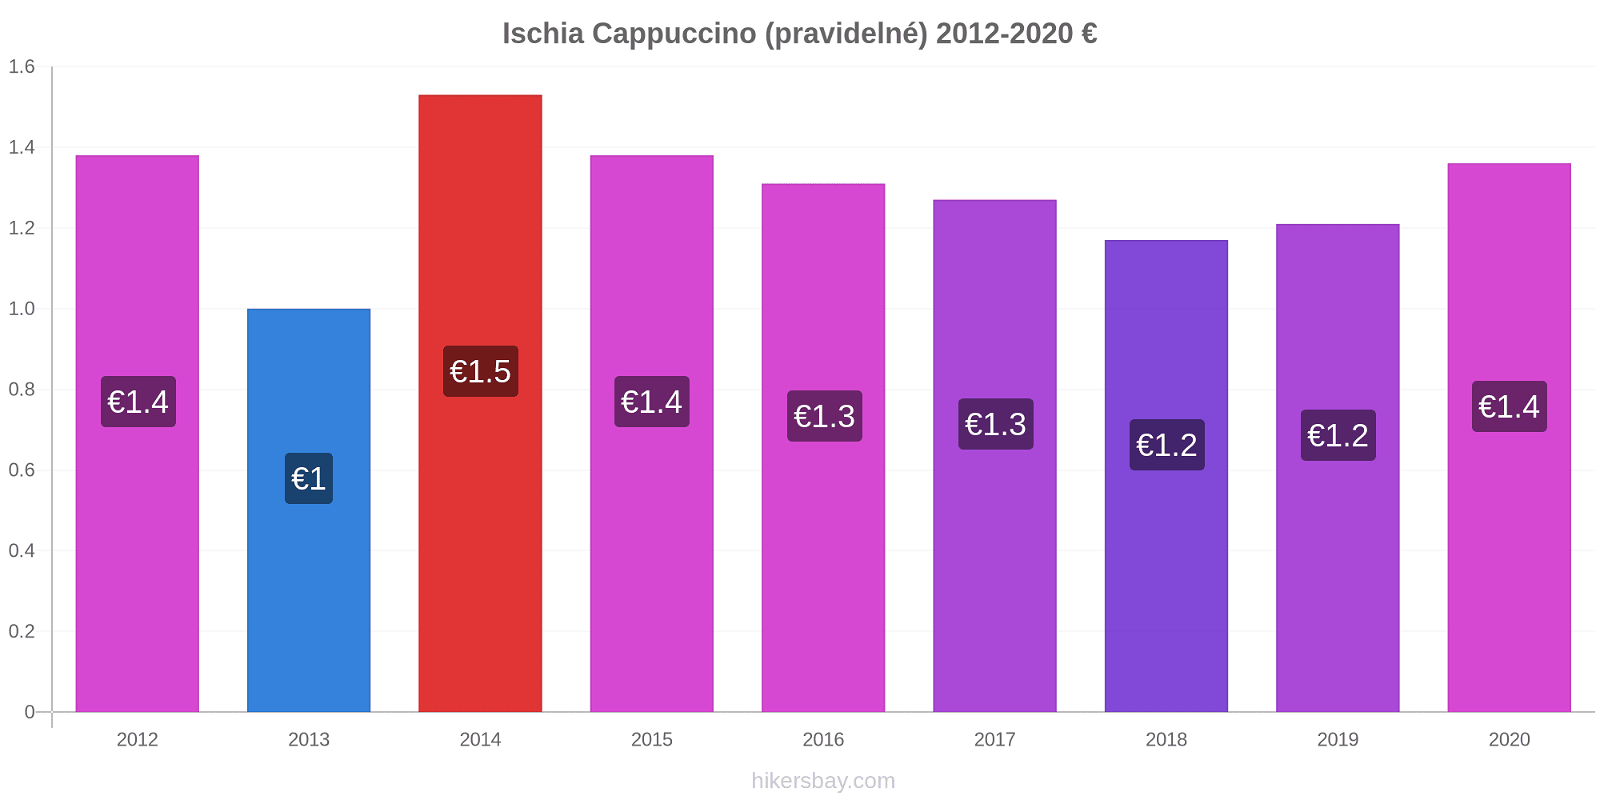 Ischia změny cen Cappuccino (pravidelné) hikersbay.com